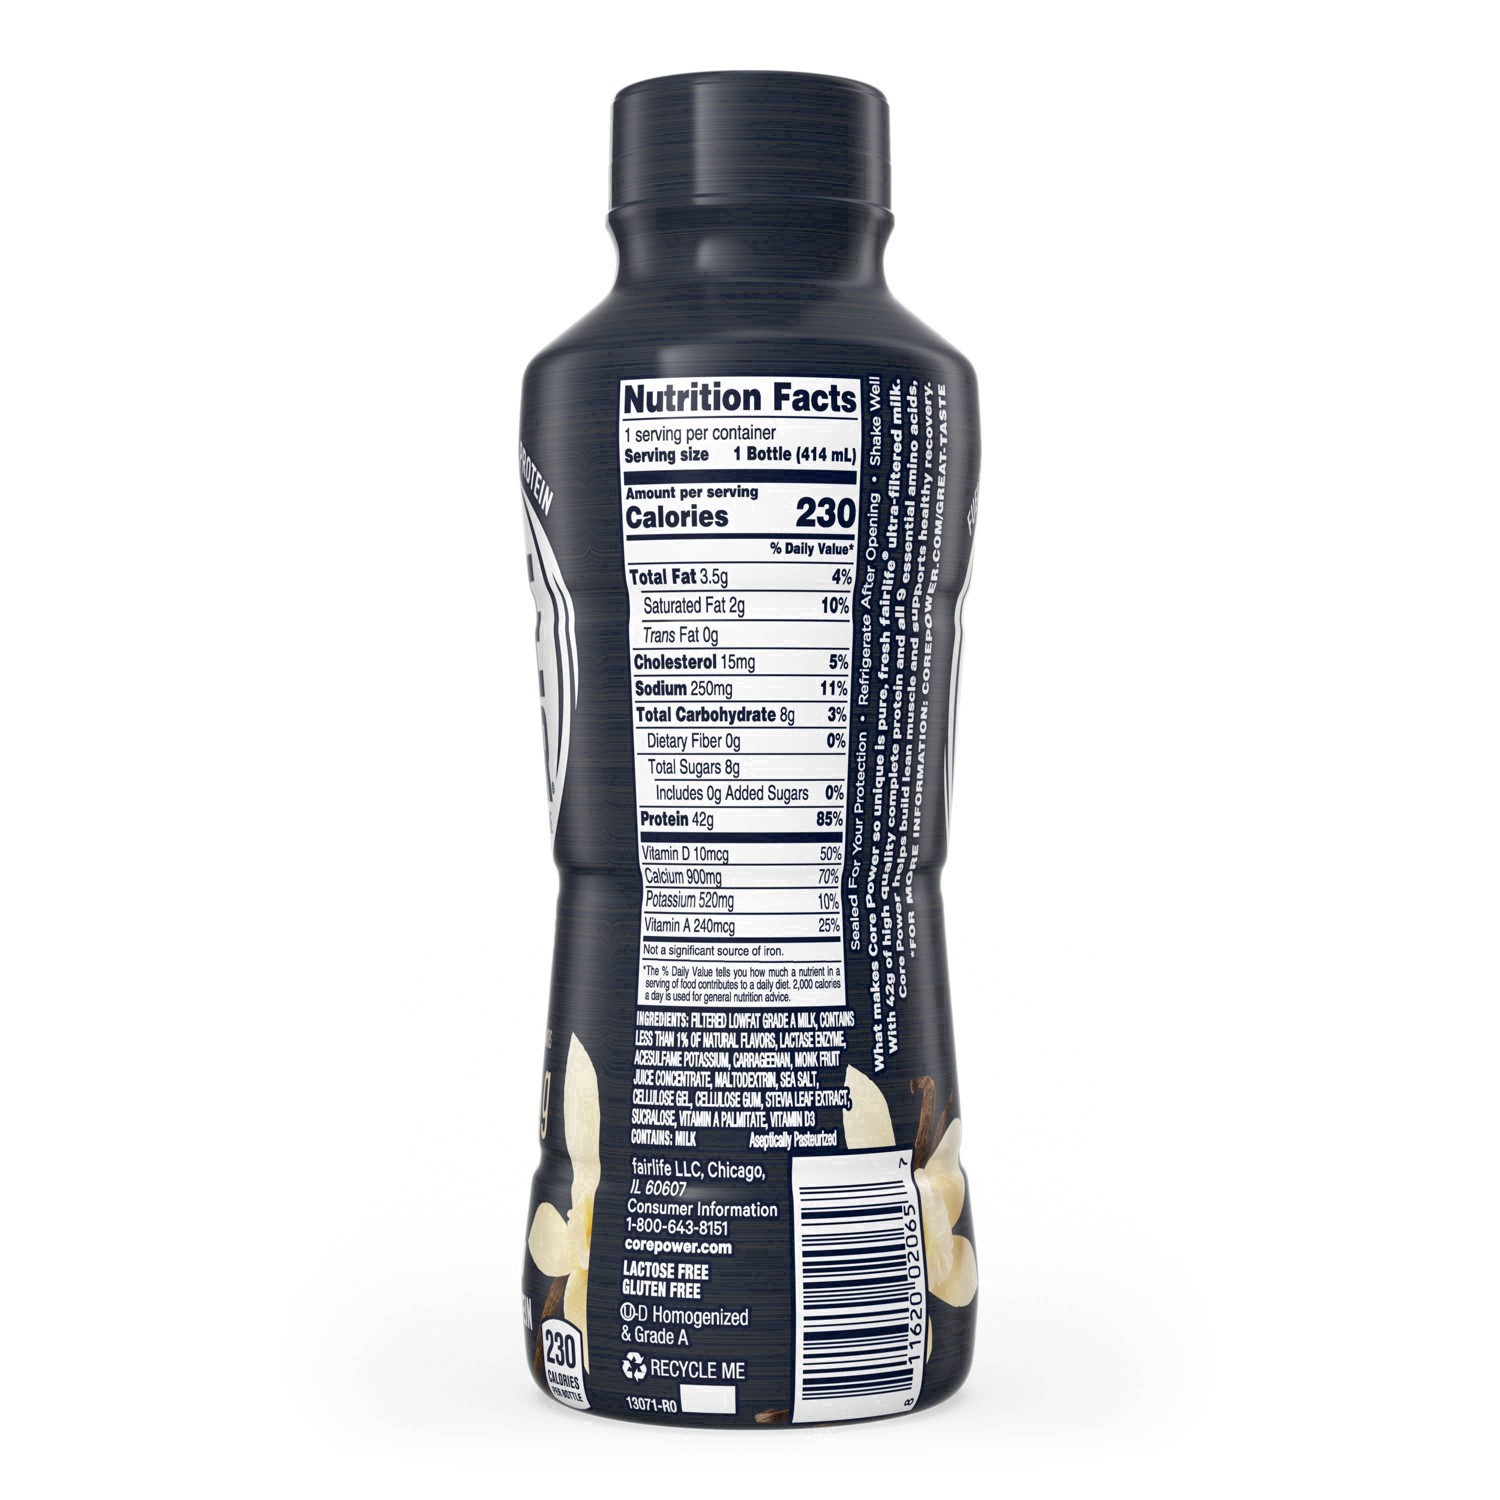 slide 53 of 78, Core Power High Protein Elite Vanilla Milk Shake 14 fl oz, 14 fl oz